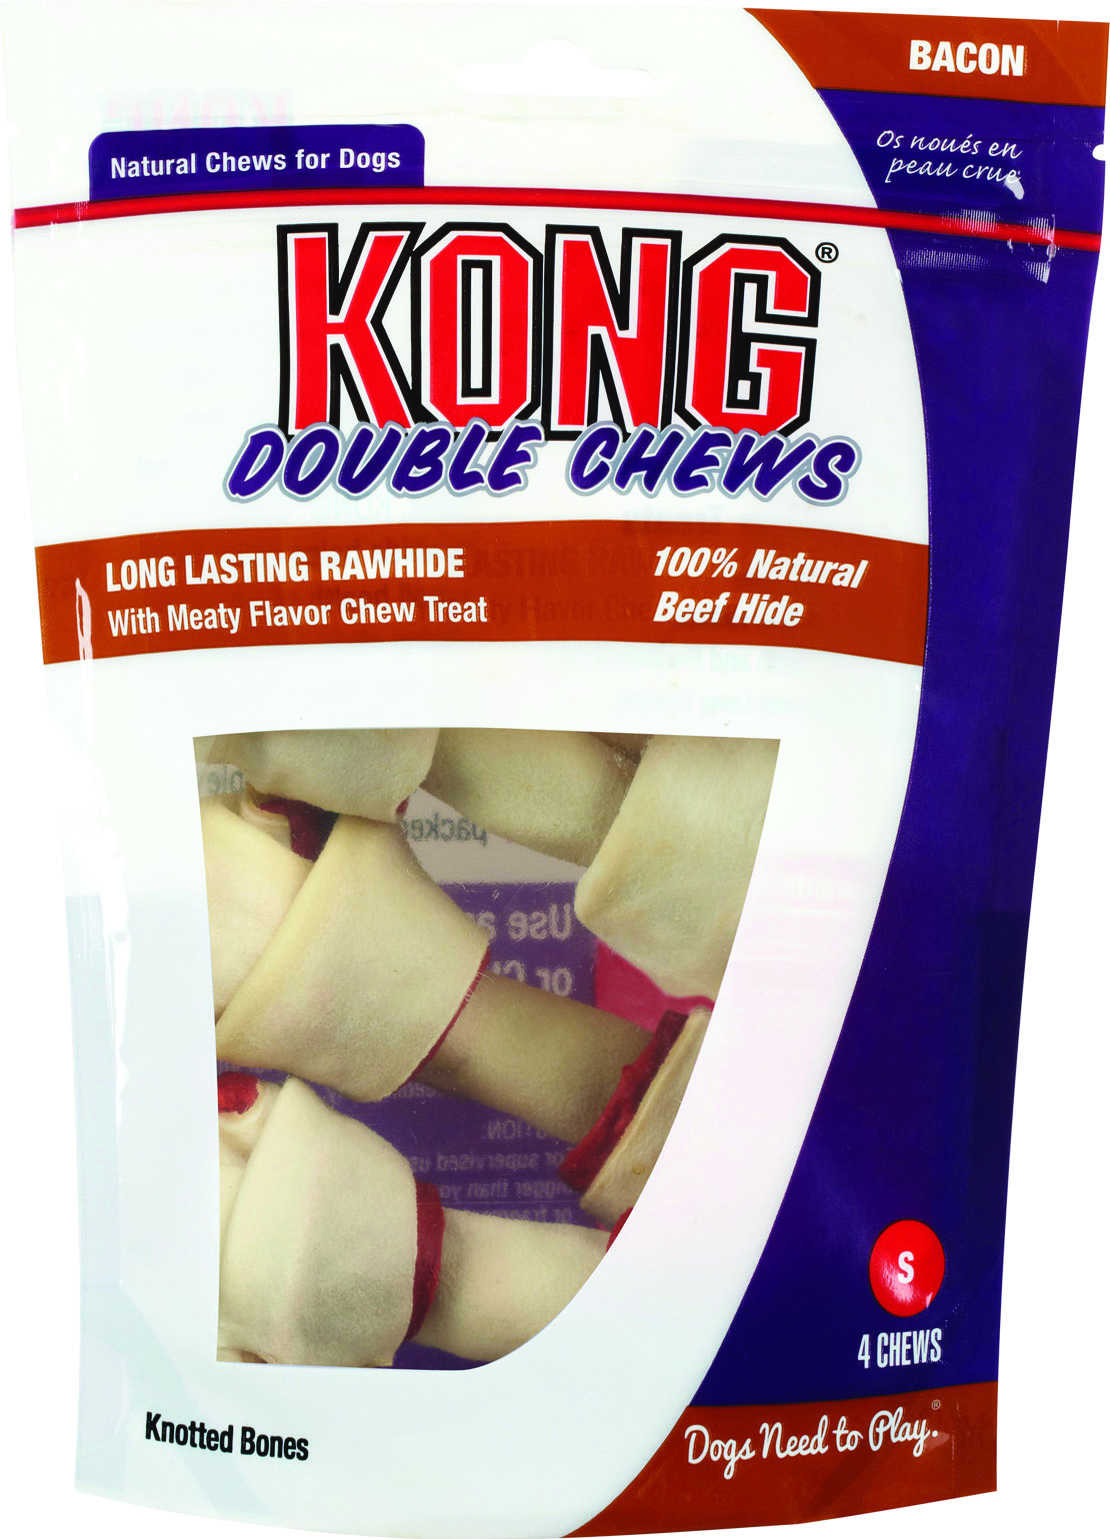 KONG DOUBLE LONG LASTING RAWHIDE